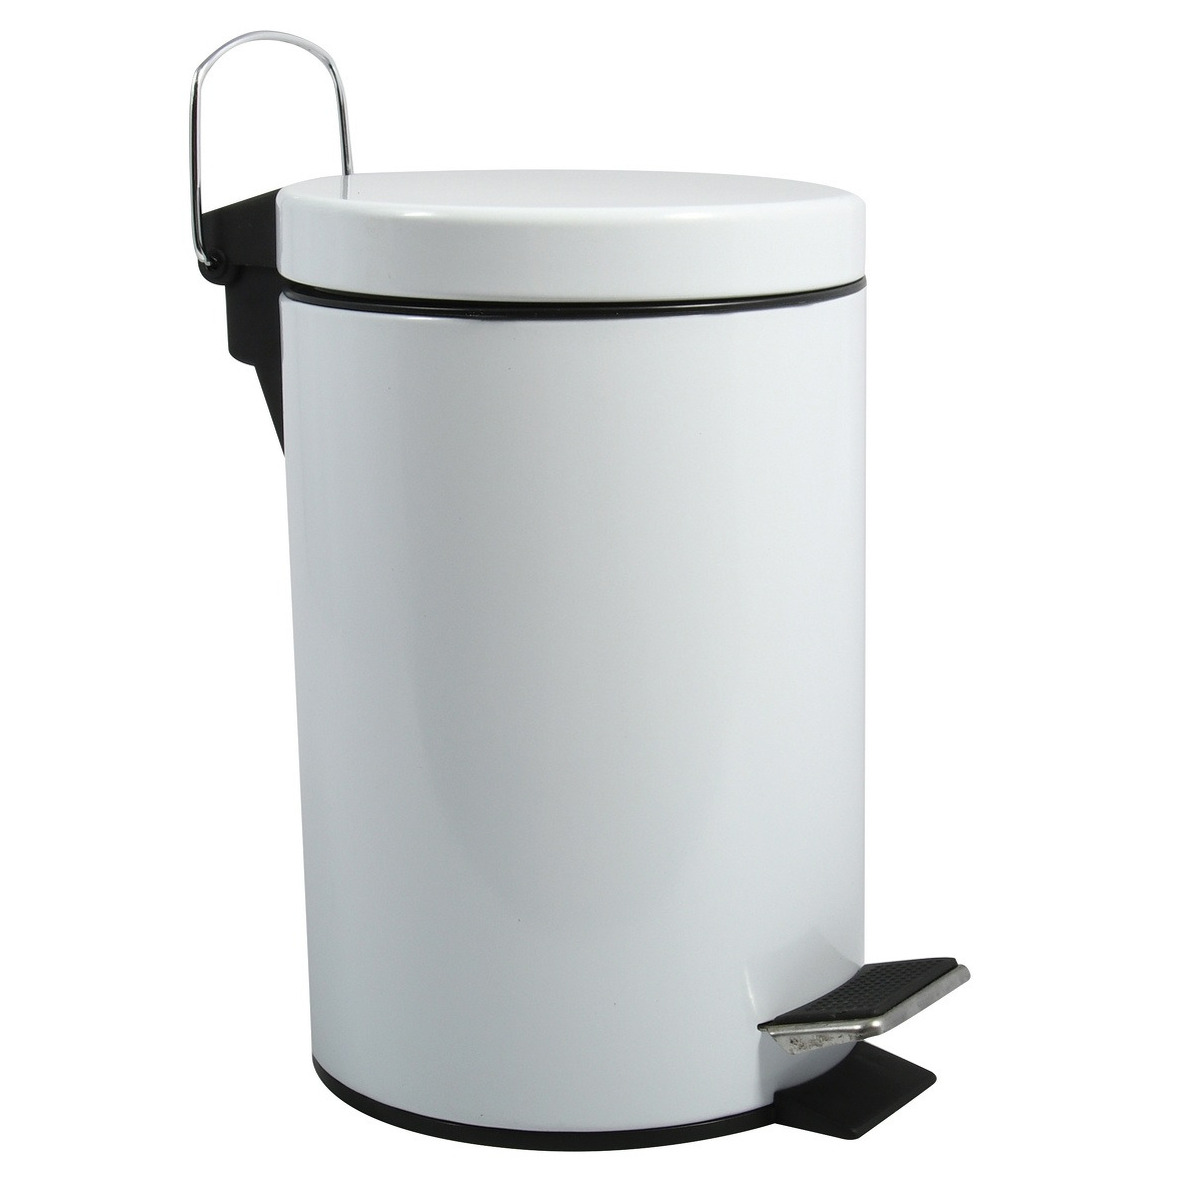 Prullenbak-pedaalemmer metaal wit 3 liter 17 x 25 cm Badkamer-toilet